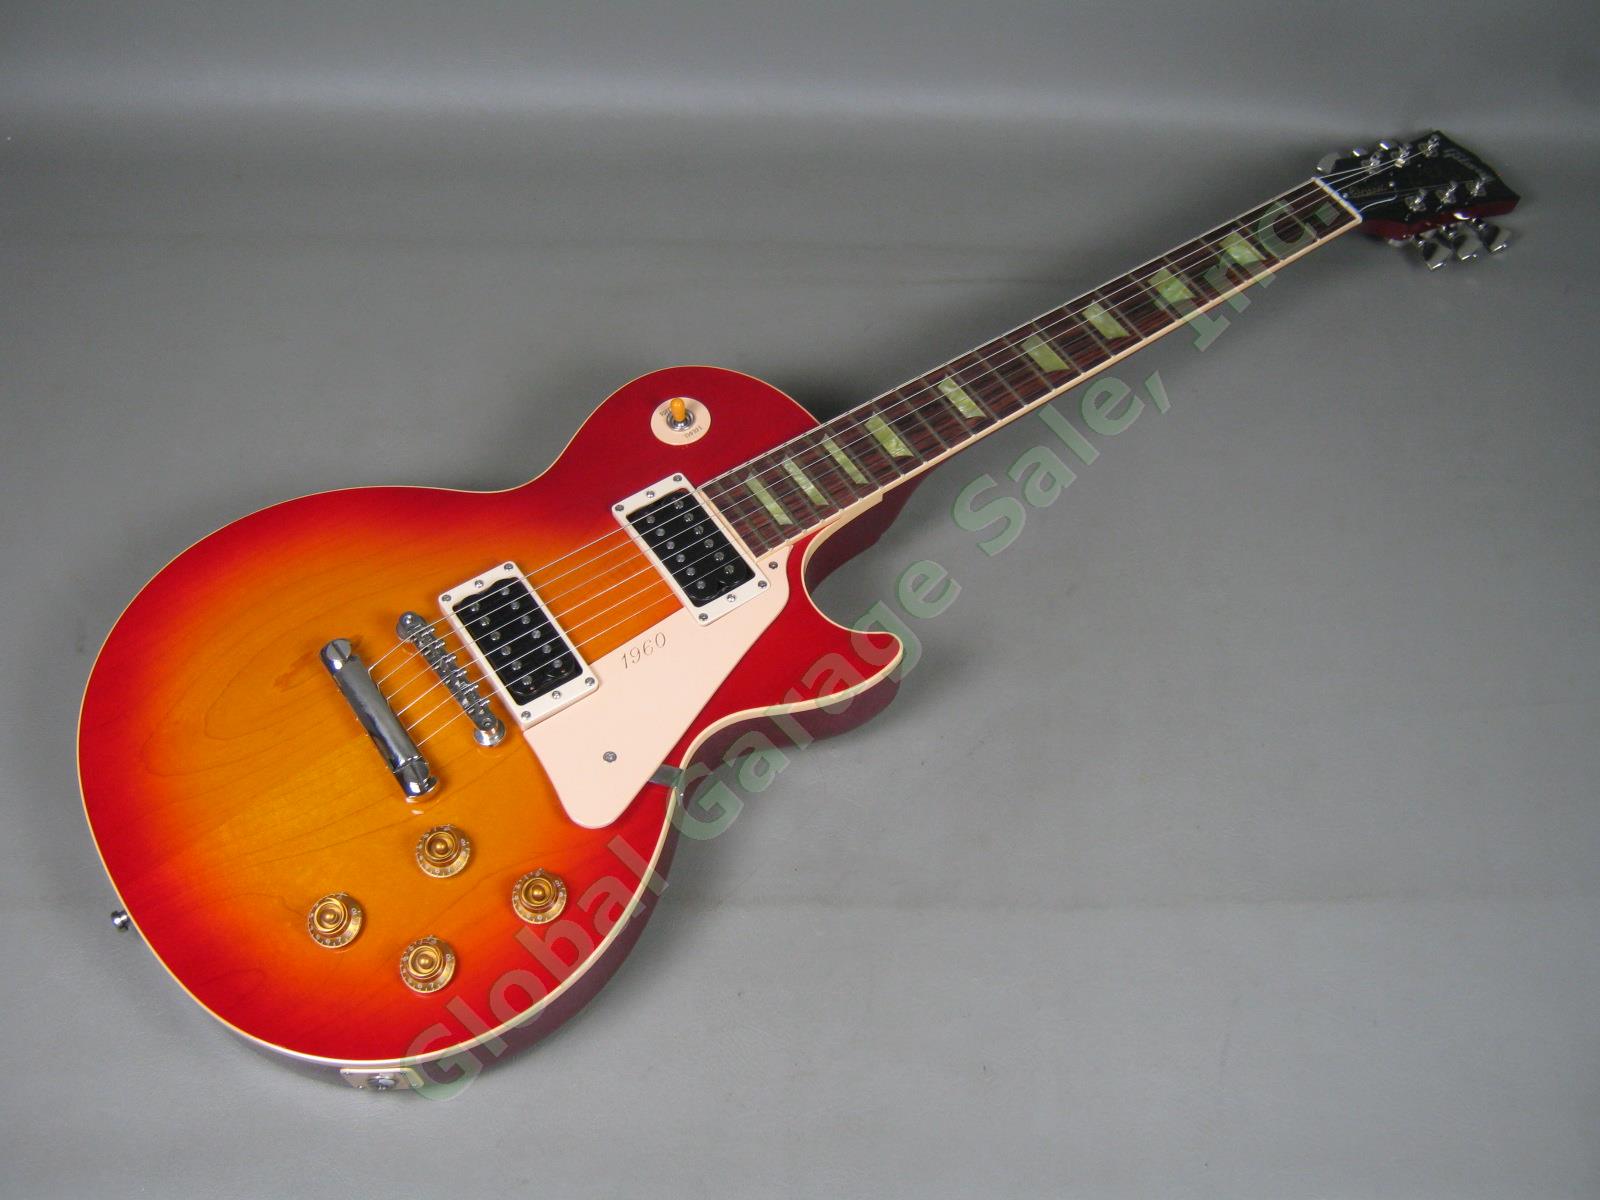 MINT! 2001 Gibson Les Paul Classic 1960 Reissue Sunburst Guitar One Owner w/Case 1